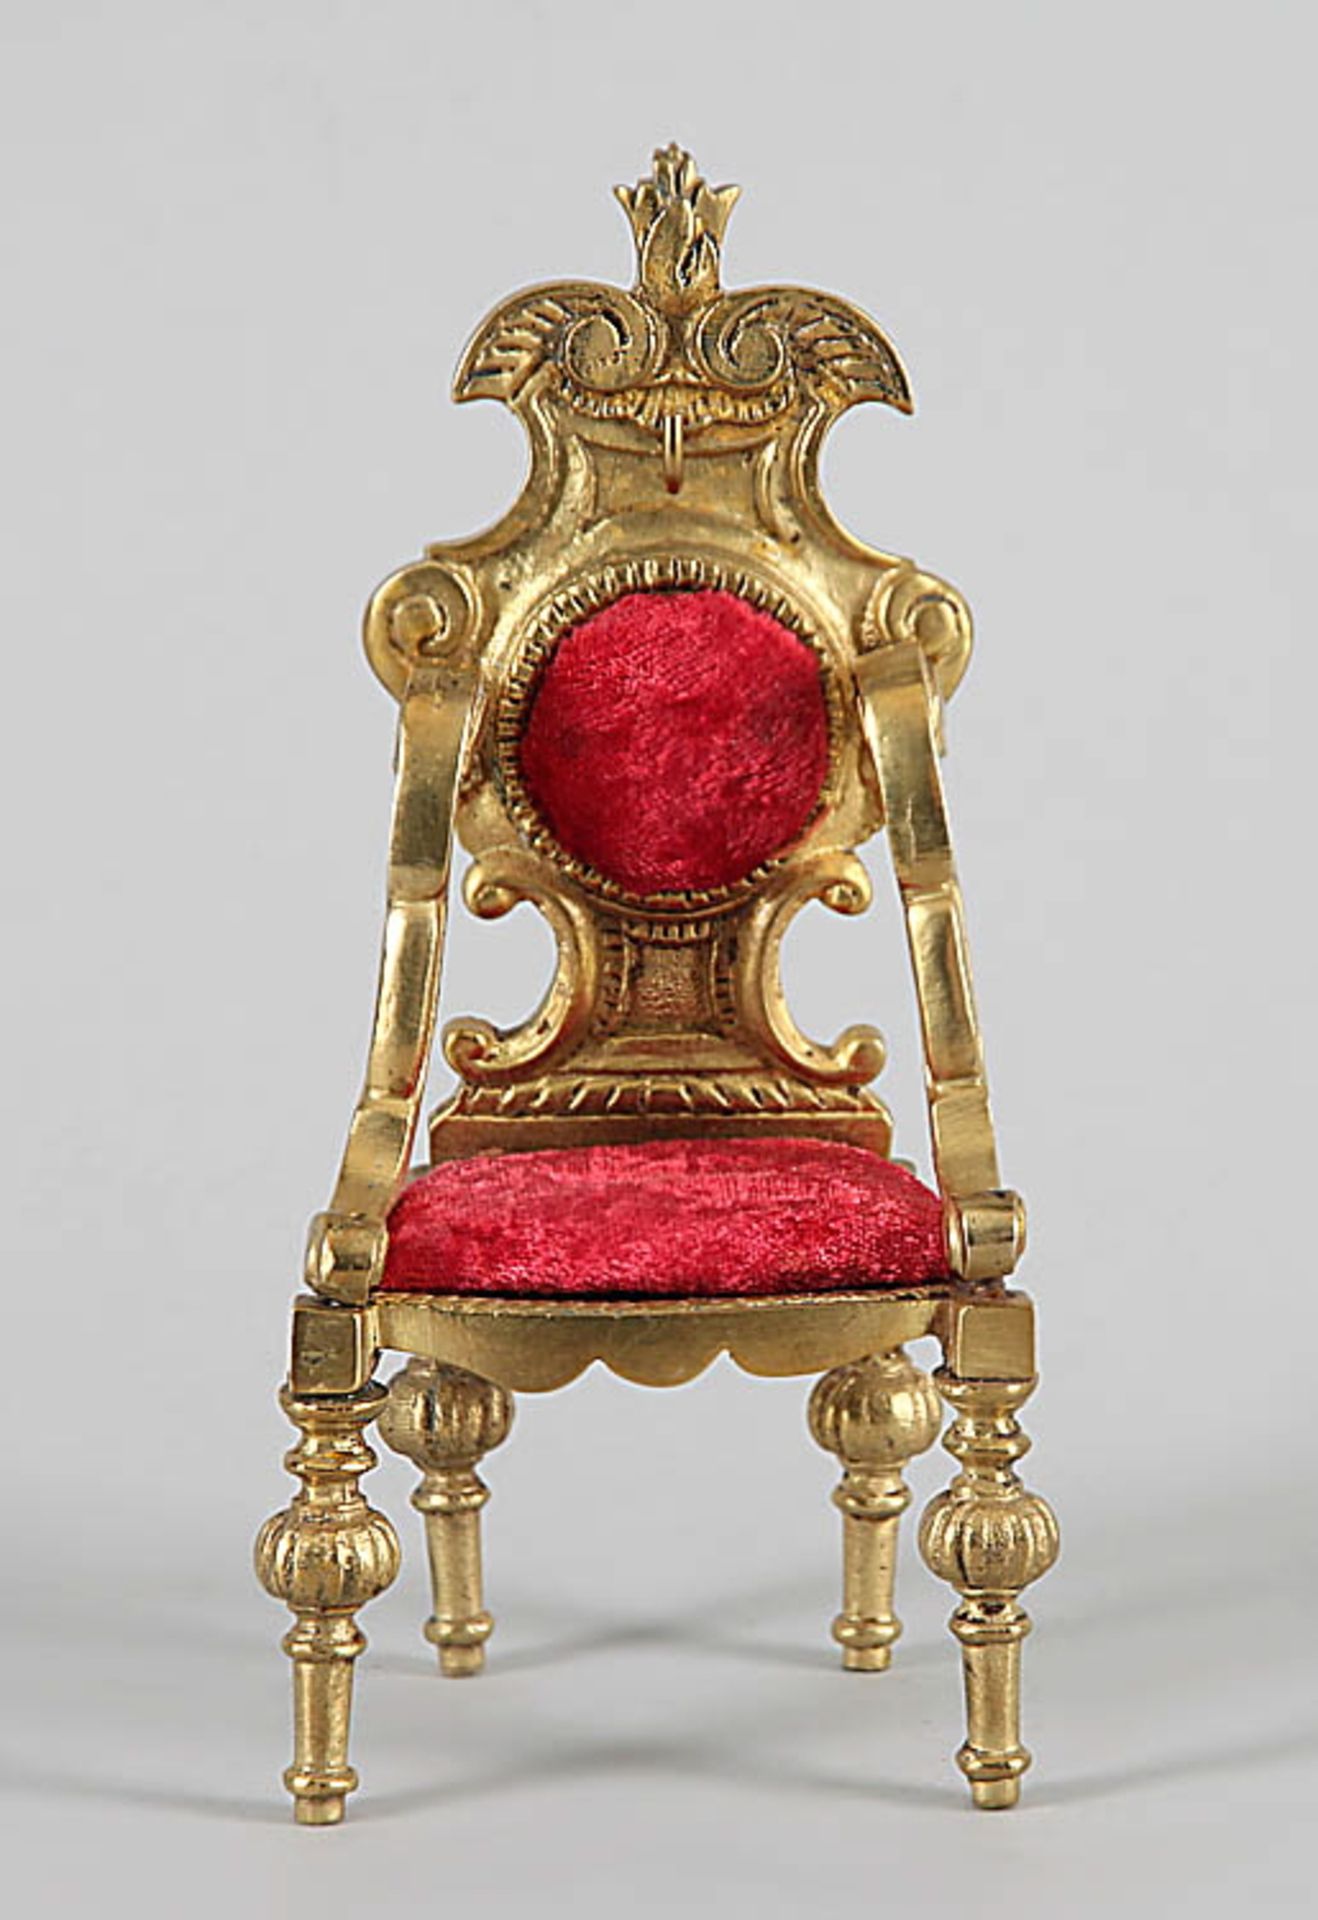 TaschenuhrständerForm eines barocken Armlehnstuhls. Messingguss, roter Samtbezug. H 15,5 cm.€ 20